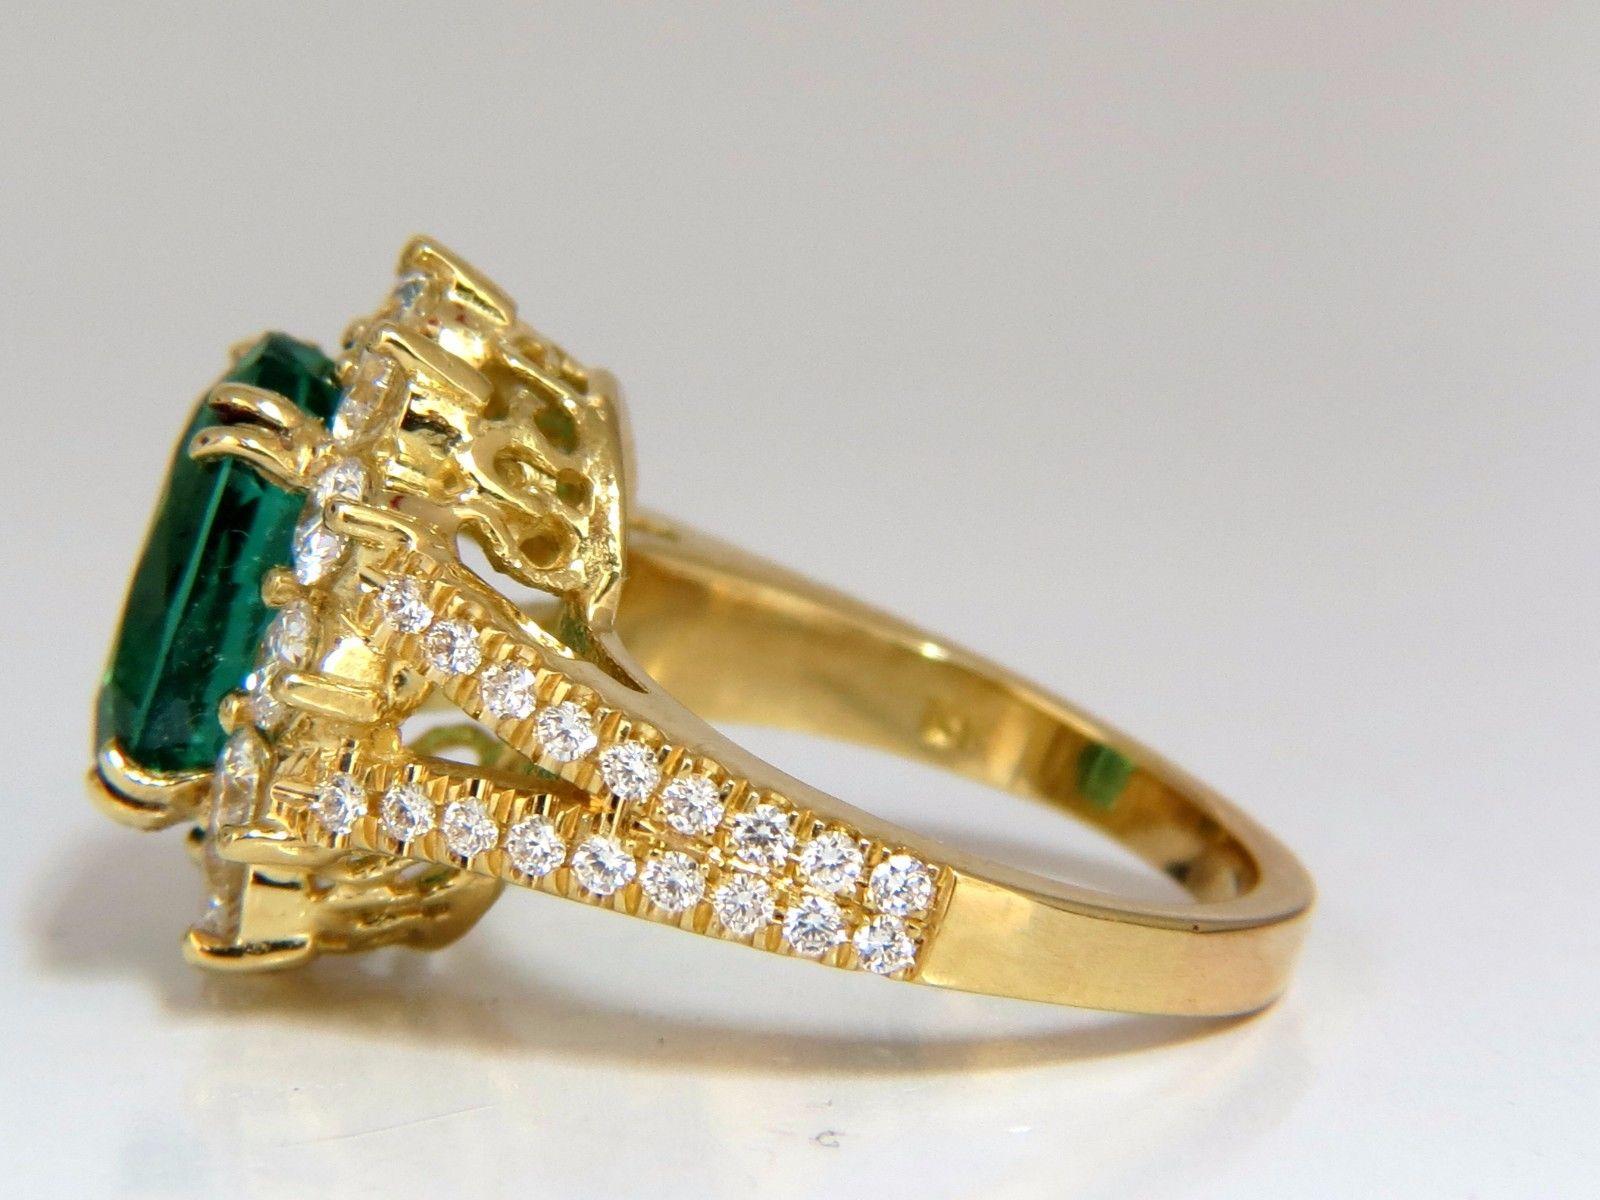 GIA Certified Natural Emerald diamonds ring.

5.26ct natural emerald

GIA Report #: 5182154739

 Transparent, Green

Classic Oval brilliant cut

12.76 x 9.26 x 6.54mm

Moderate 